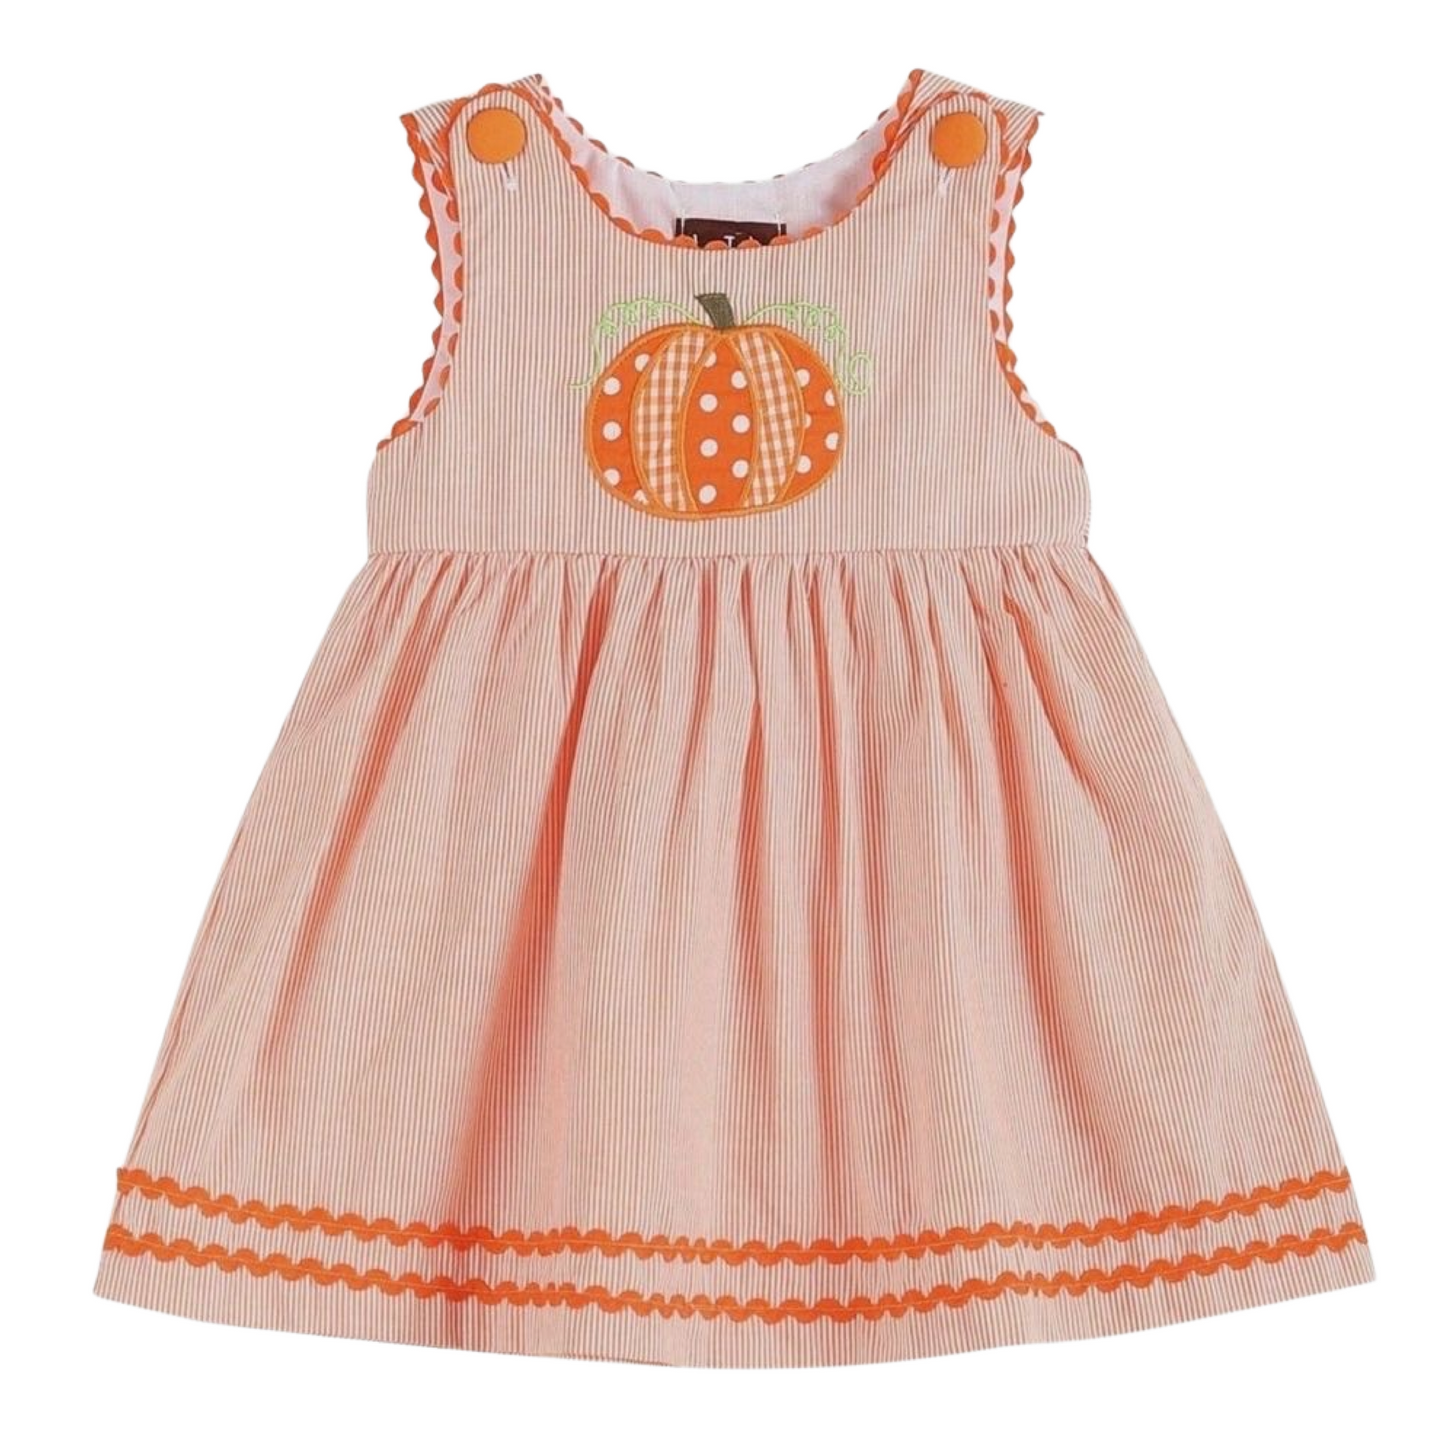 Orange Striped Pumpkin A-Line Dress: 3T, 4T, 5